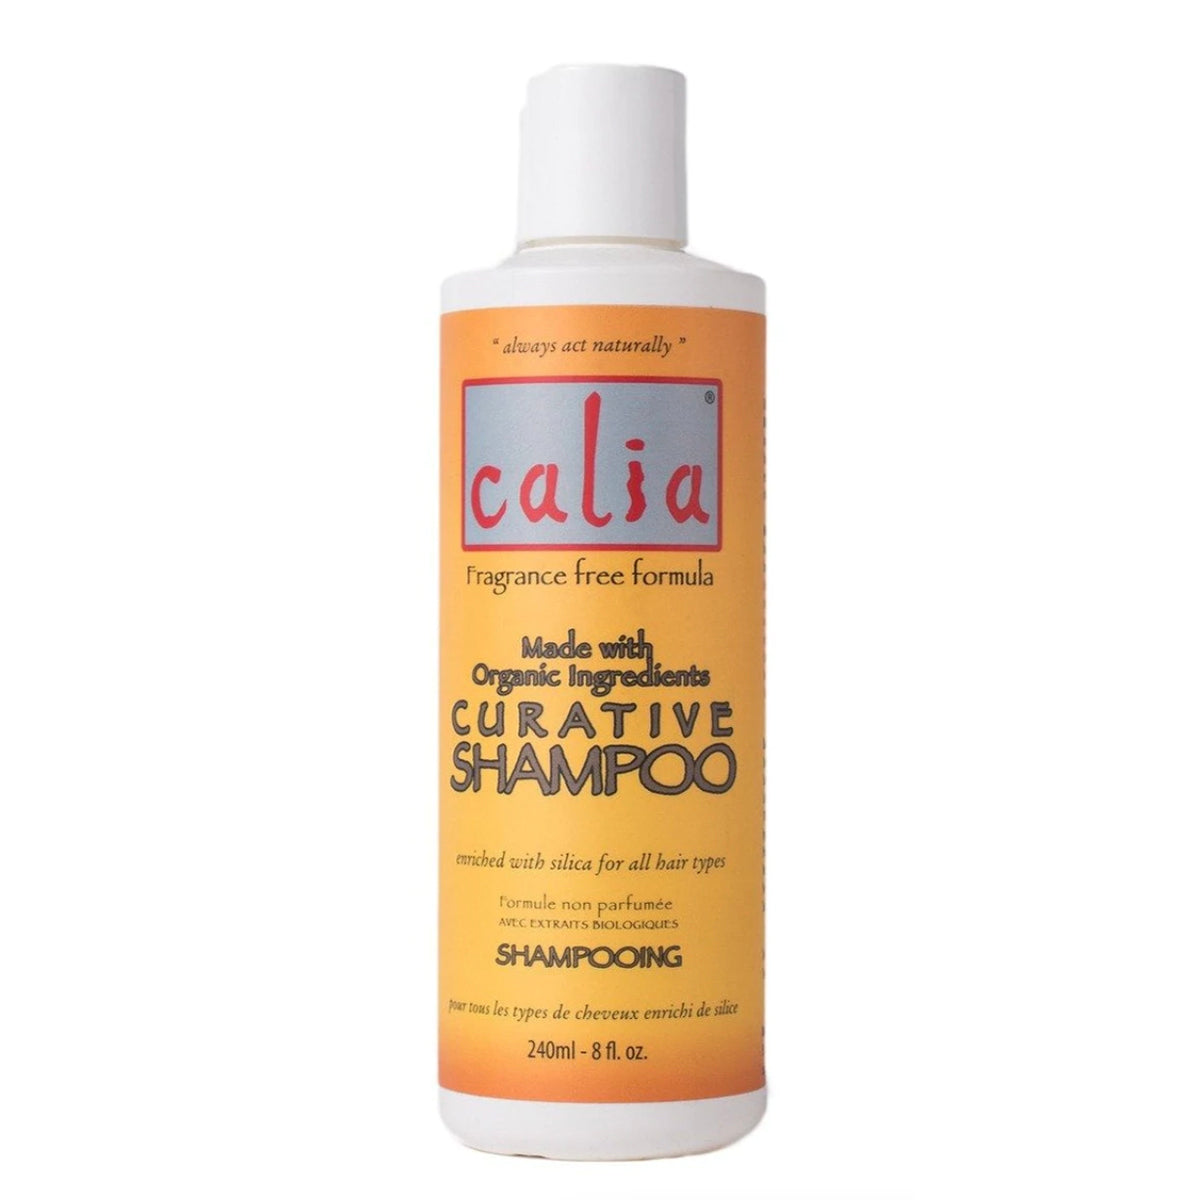 curative shampoo 240ml